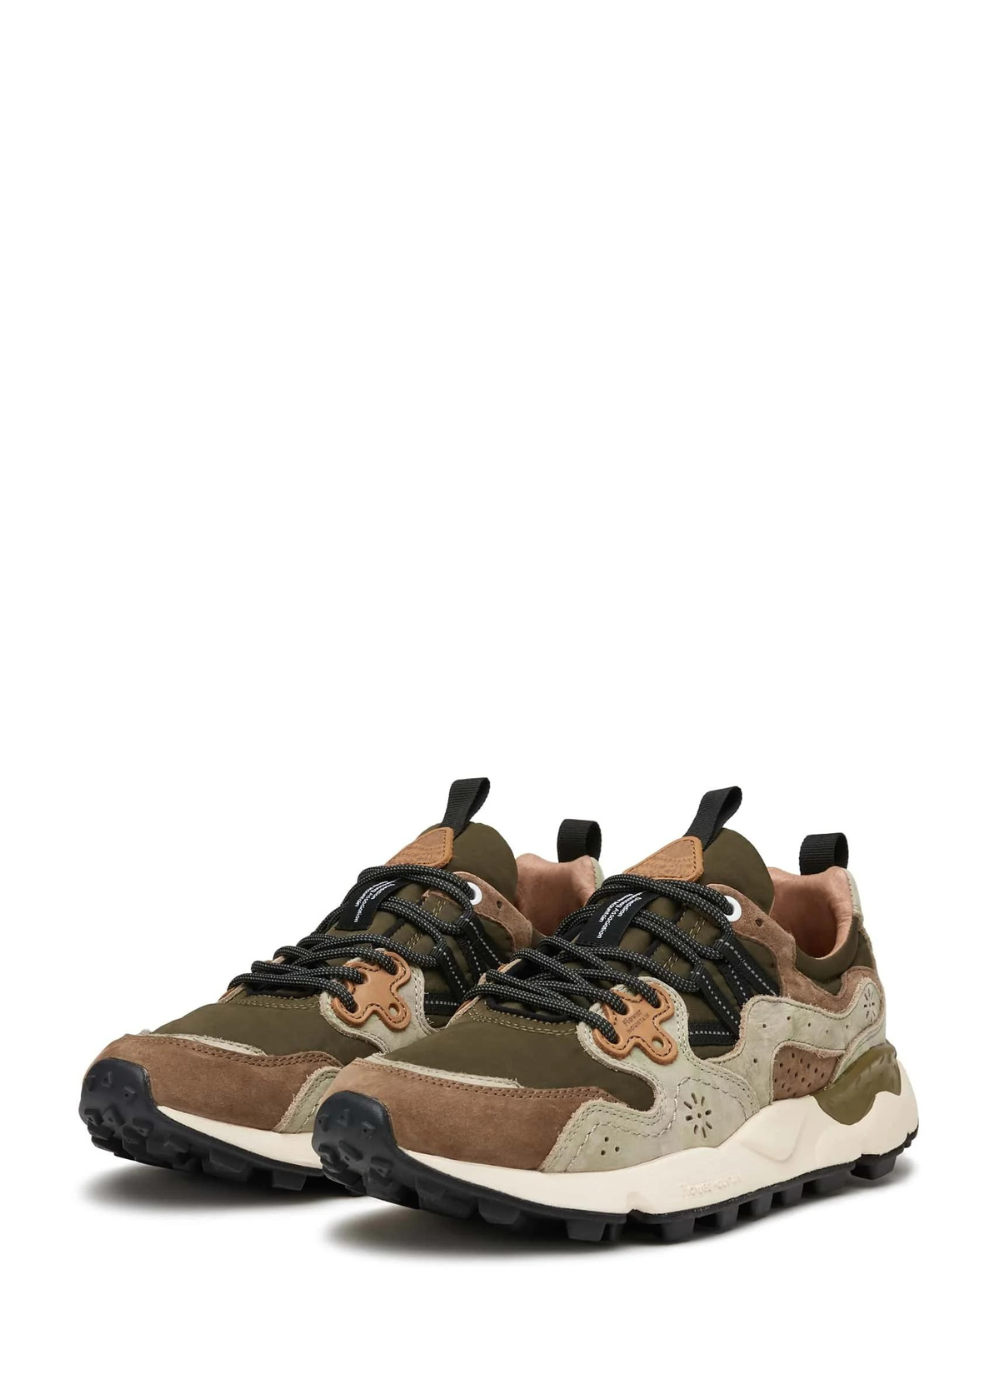 YAMANO 3 | Leather & Nylon Sneaker | Black/Military